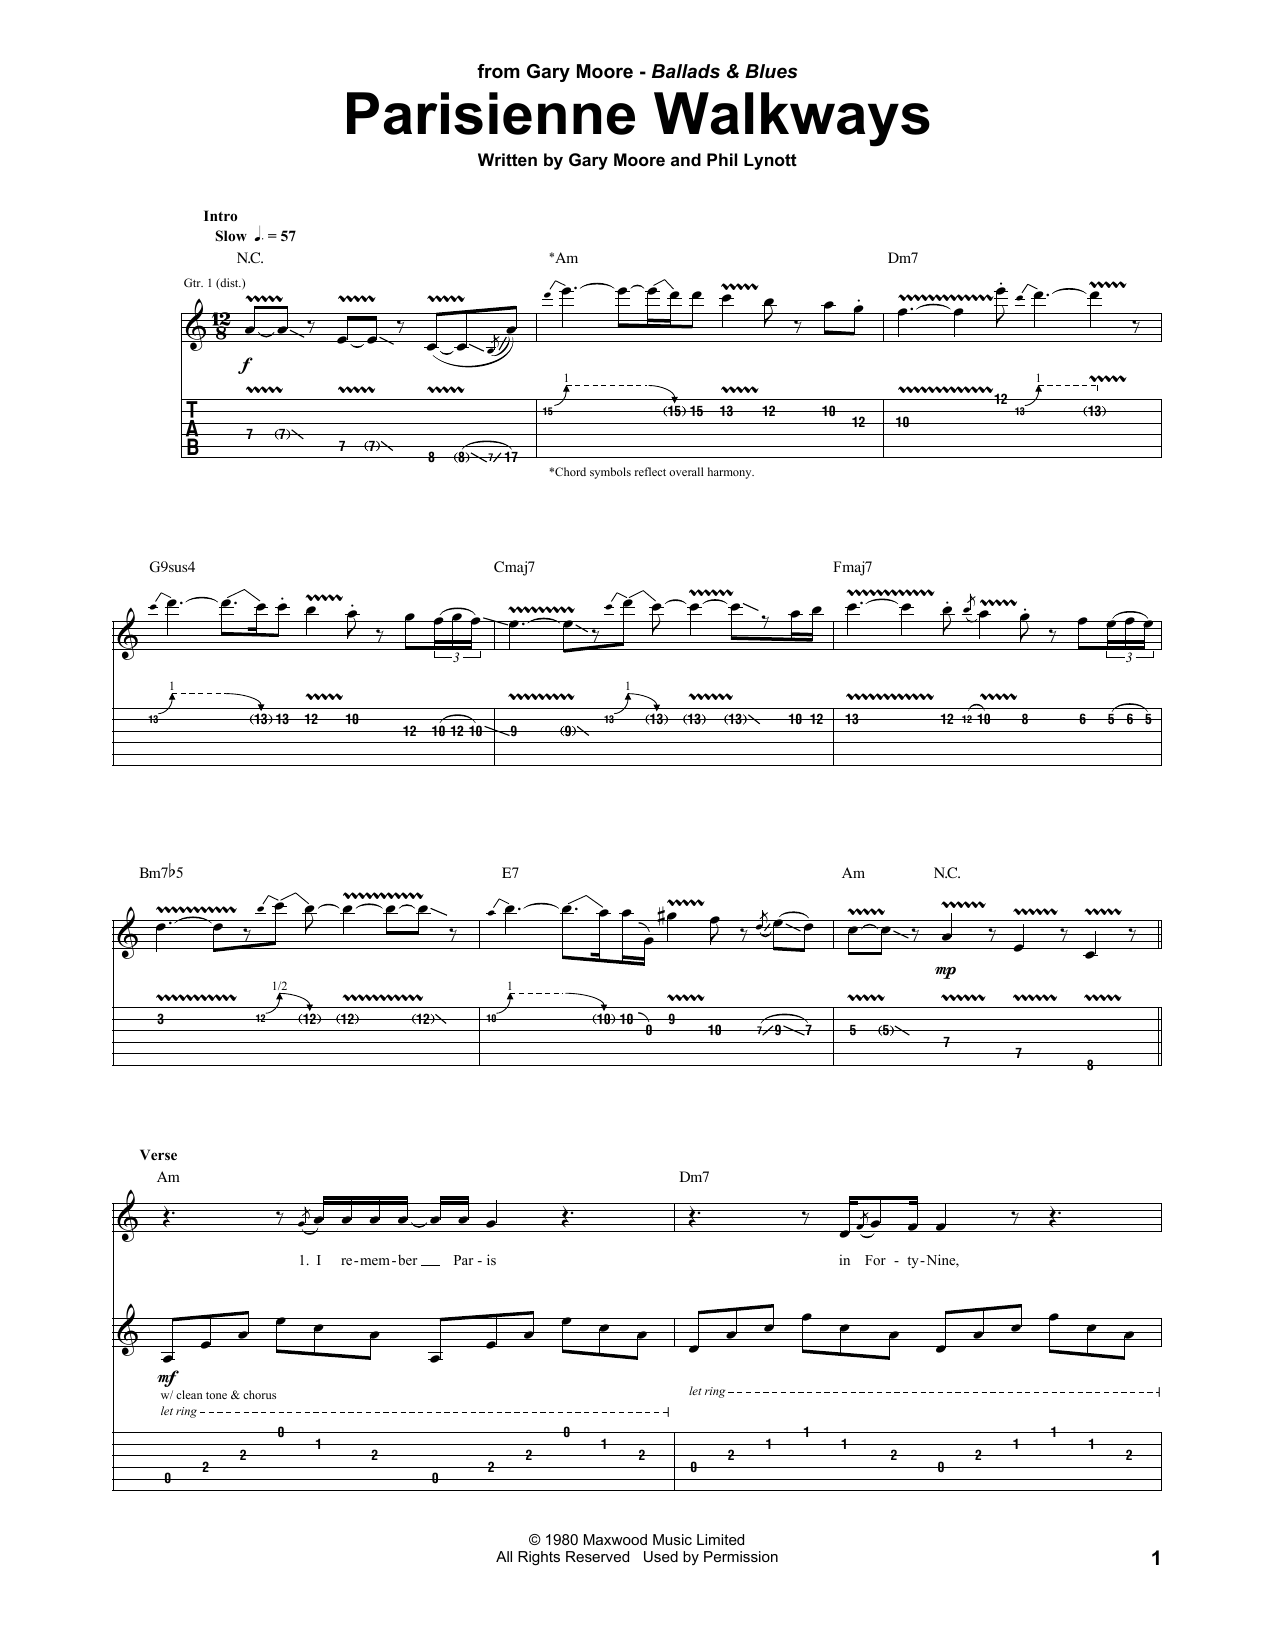 Gary Moore Parisienne Walkways Sheet Music Notes & Chords for Guitar Tab - Download or Print PDF